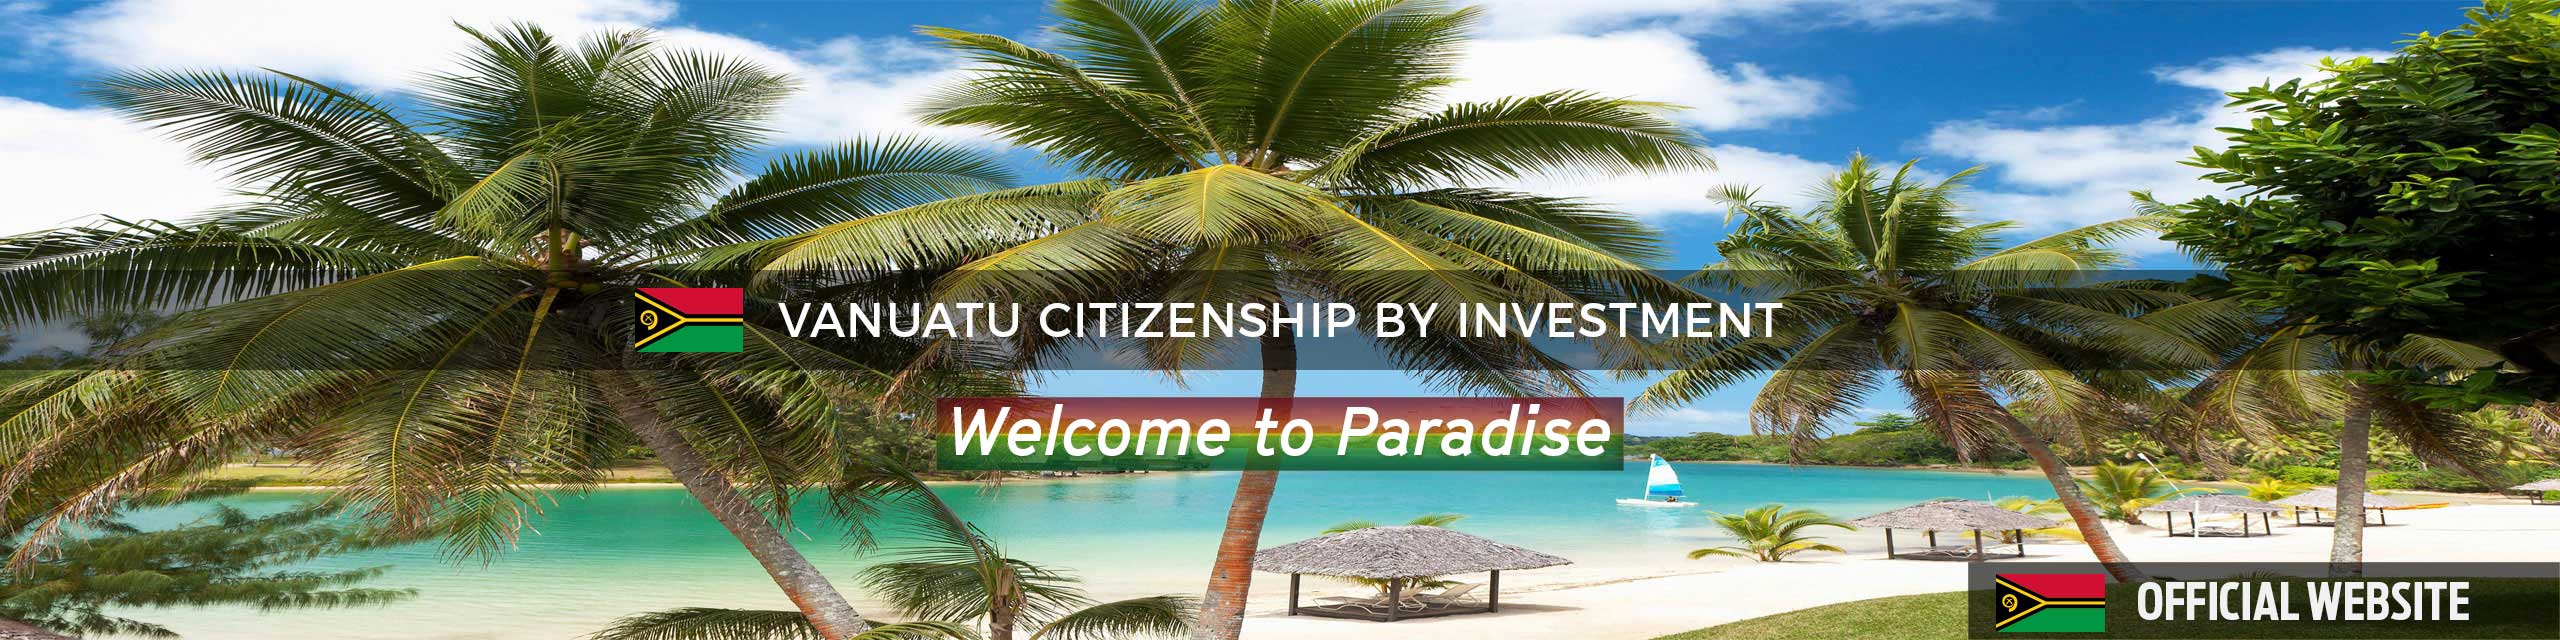 Vanuatu Citizenship by Investment Program & Passport